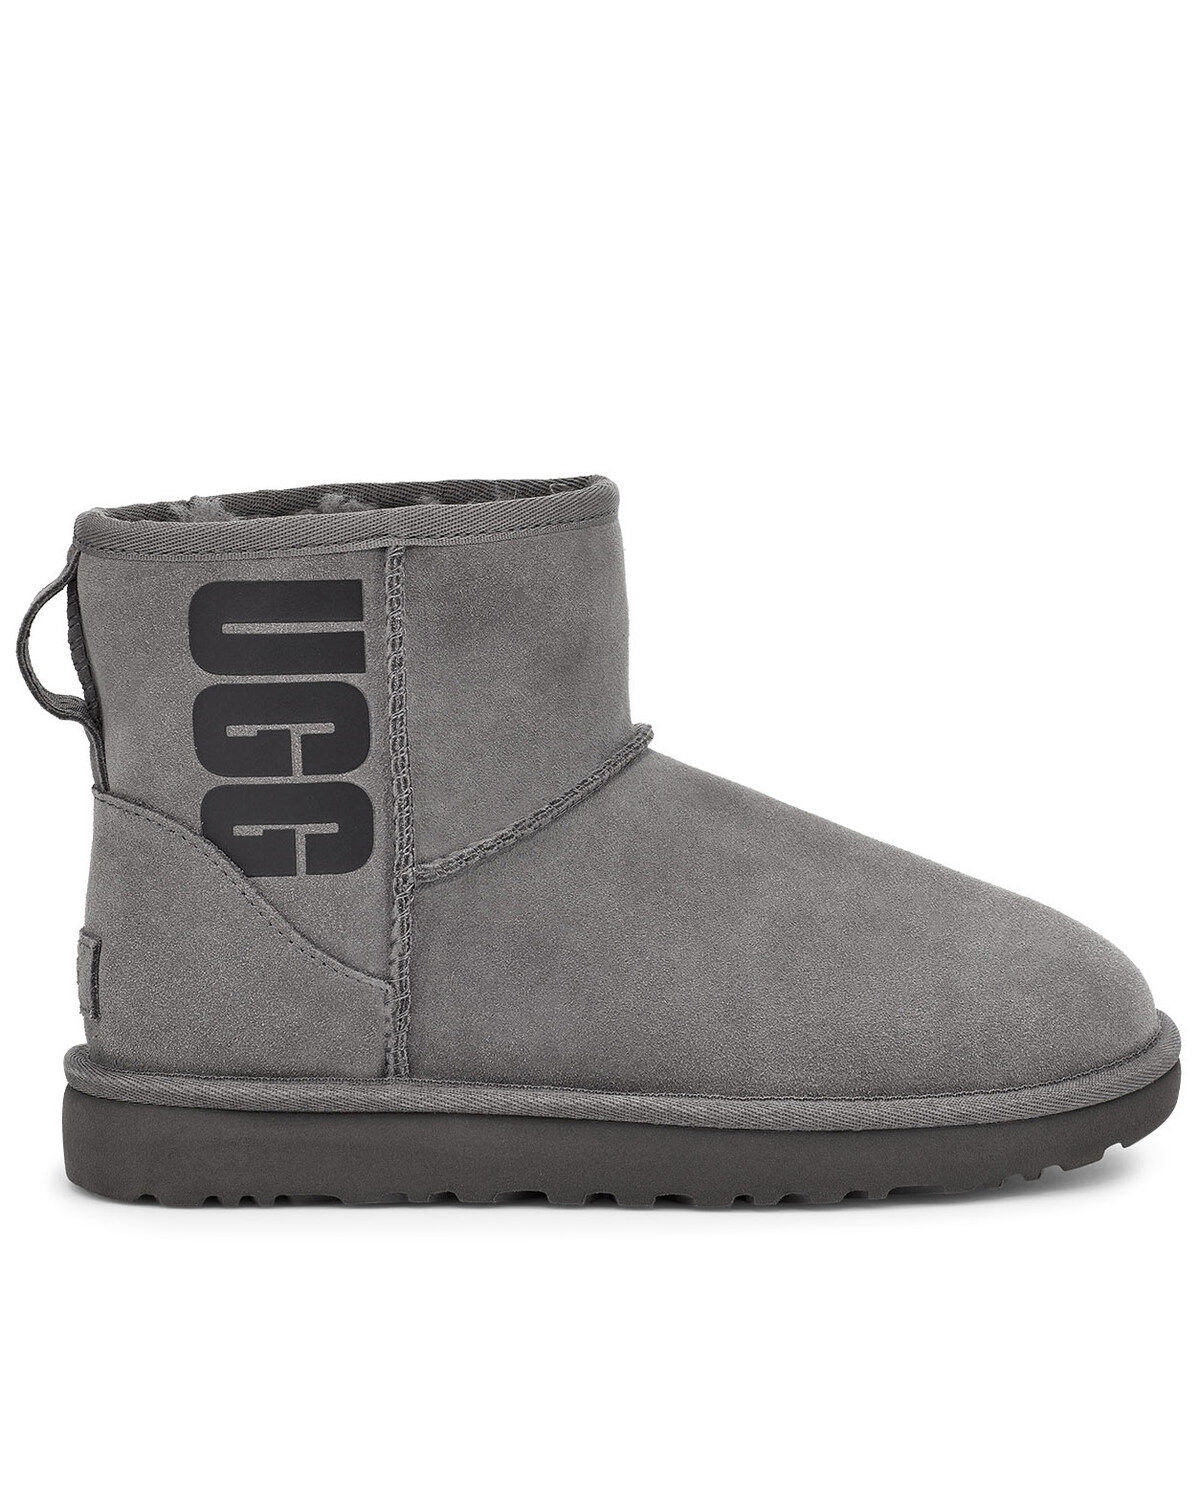 grey ugg mini boots